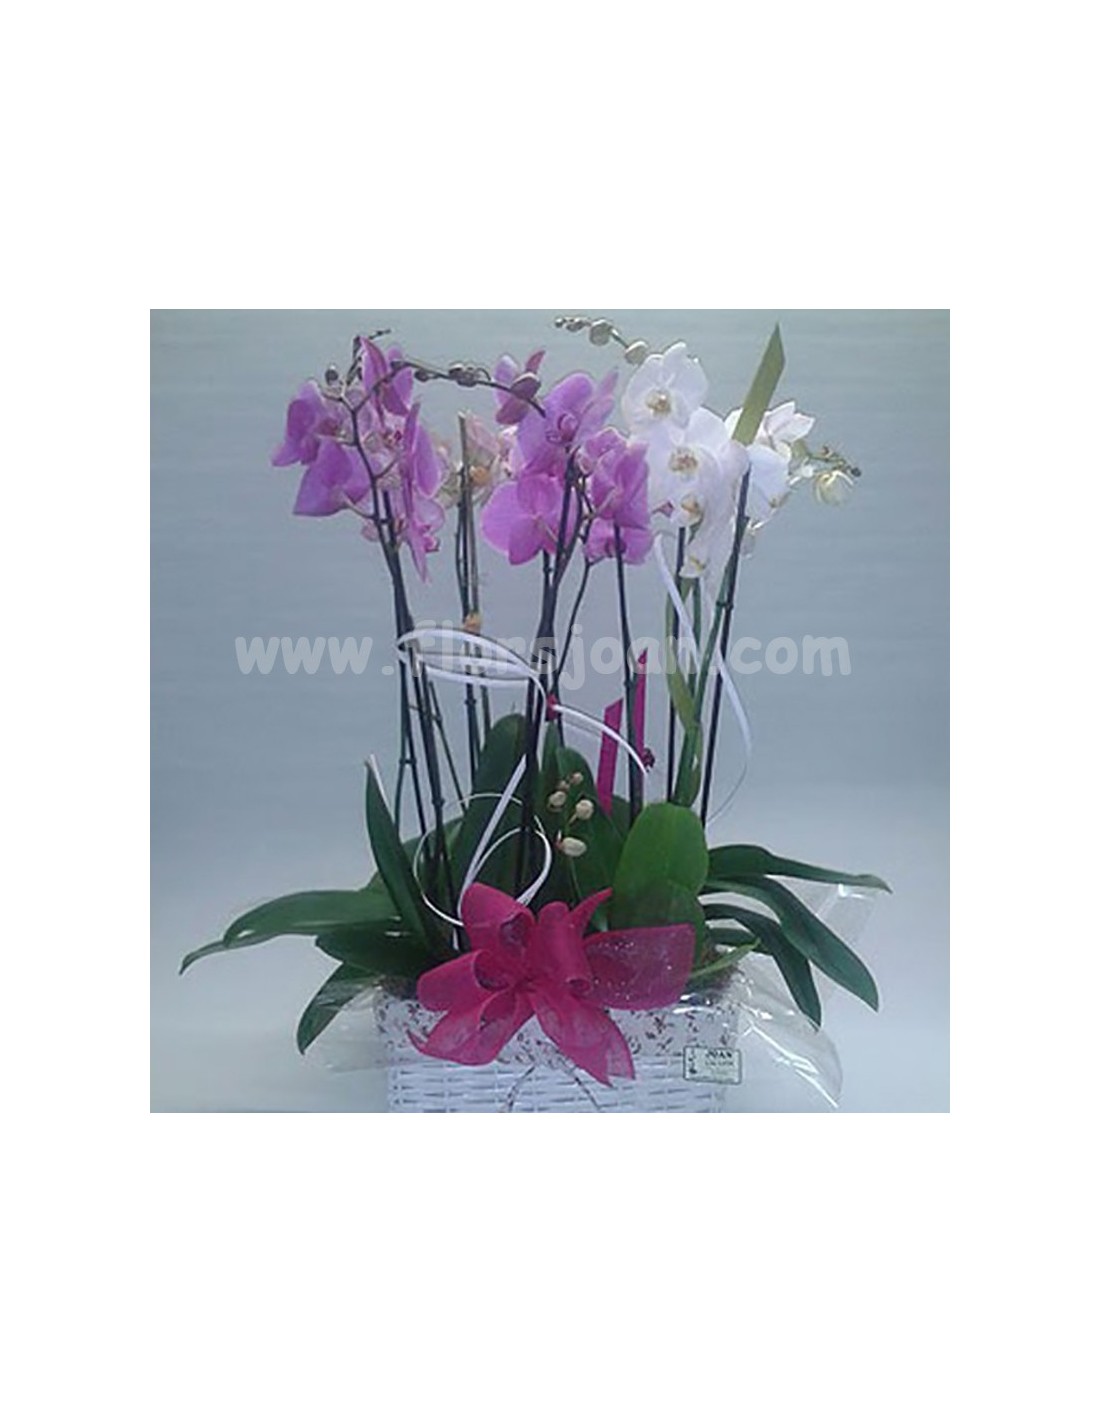 Comprar Cesta con Orquídeas online Barcelona | Flors Joan | Flors Joan